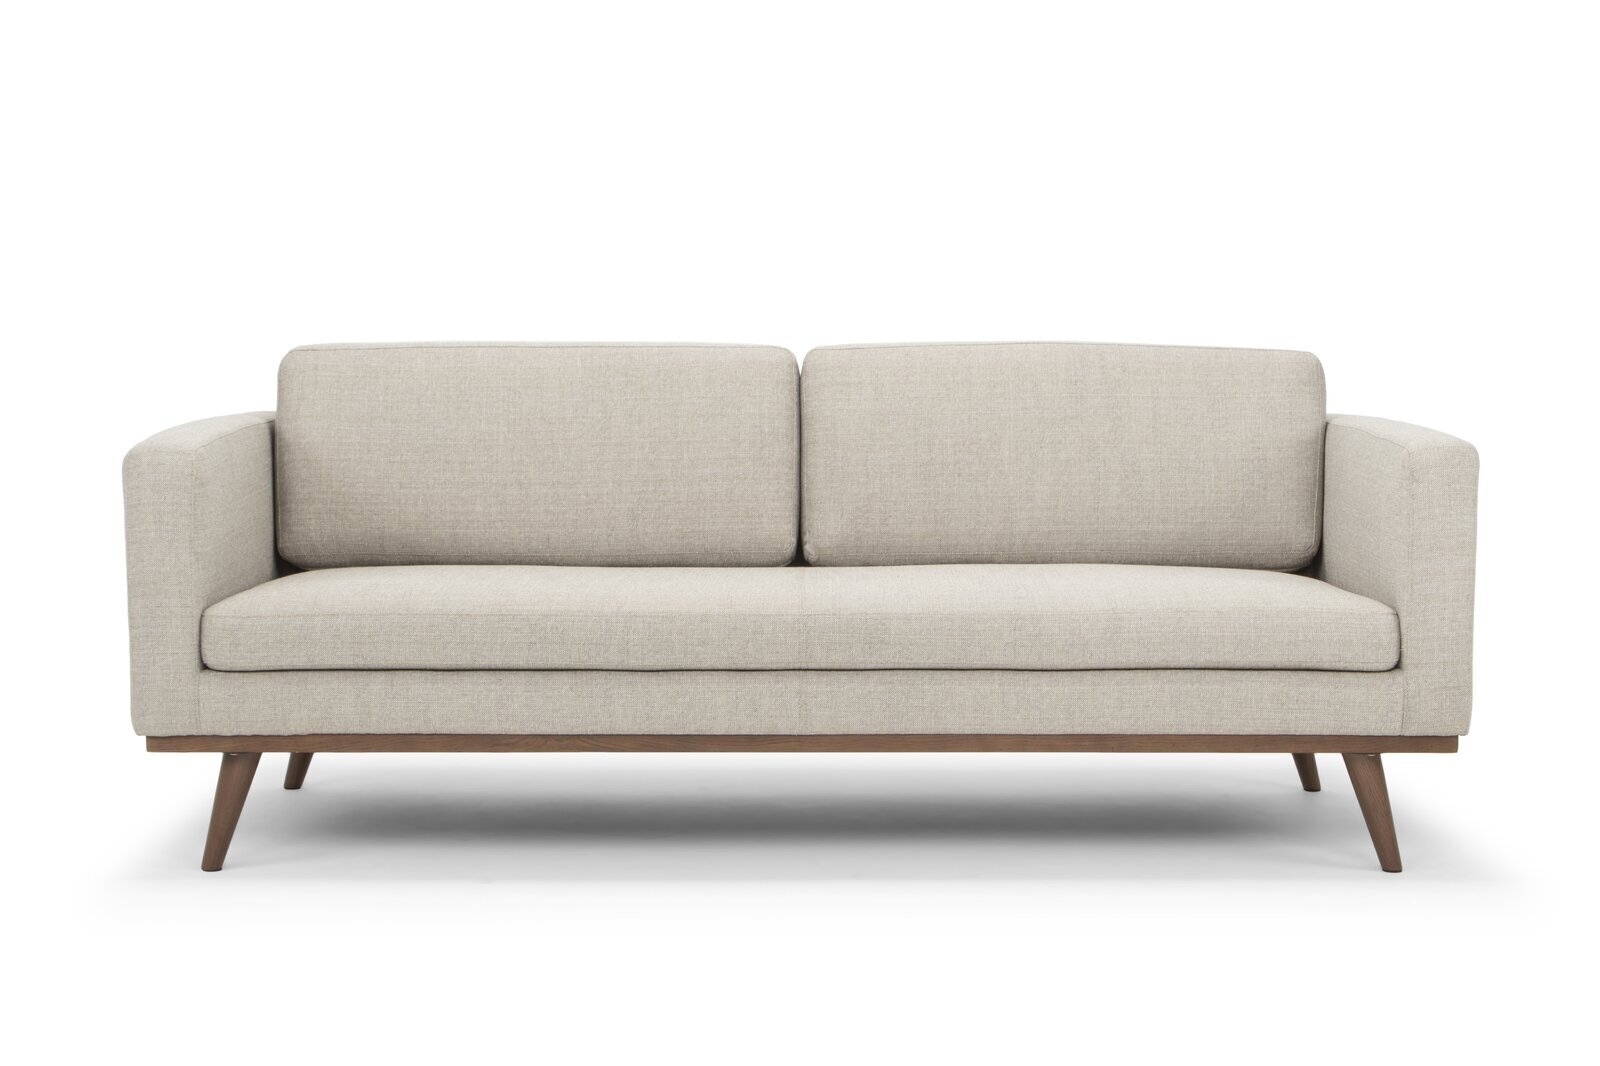 Mid century modern single cushion couch